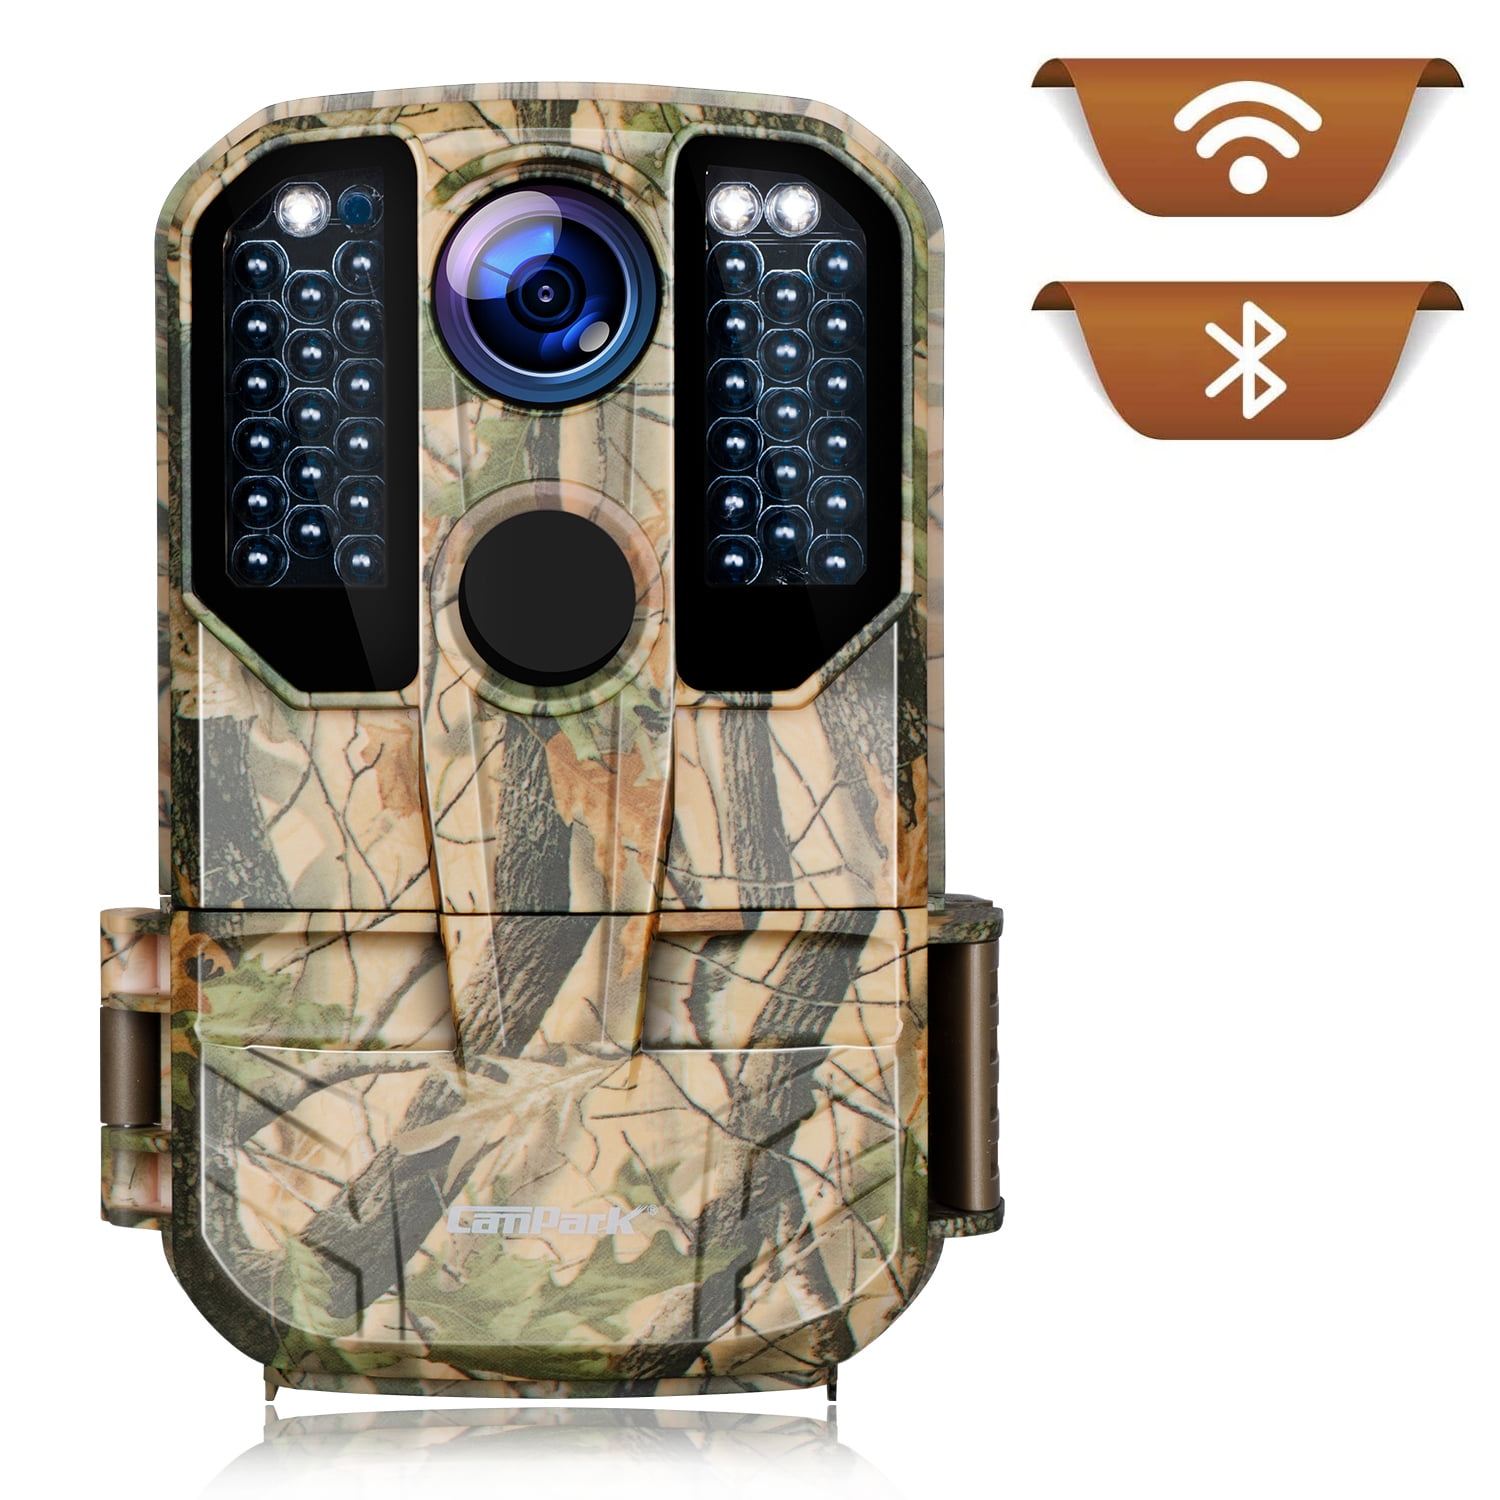 Campark Mini Trail Camera 16Mp 1080P Hd Game Camera Waterproof Wildlife Scouting 